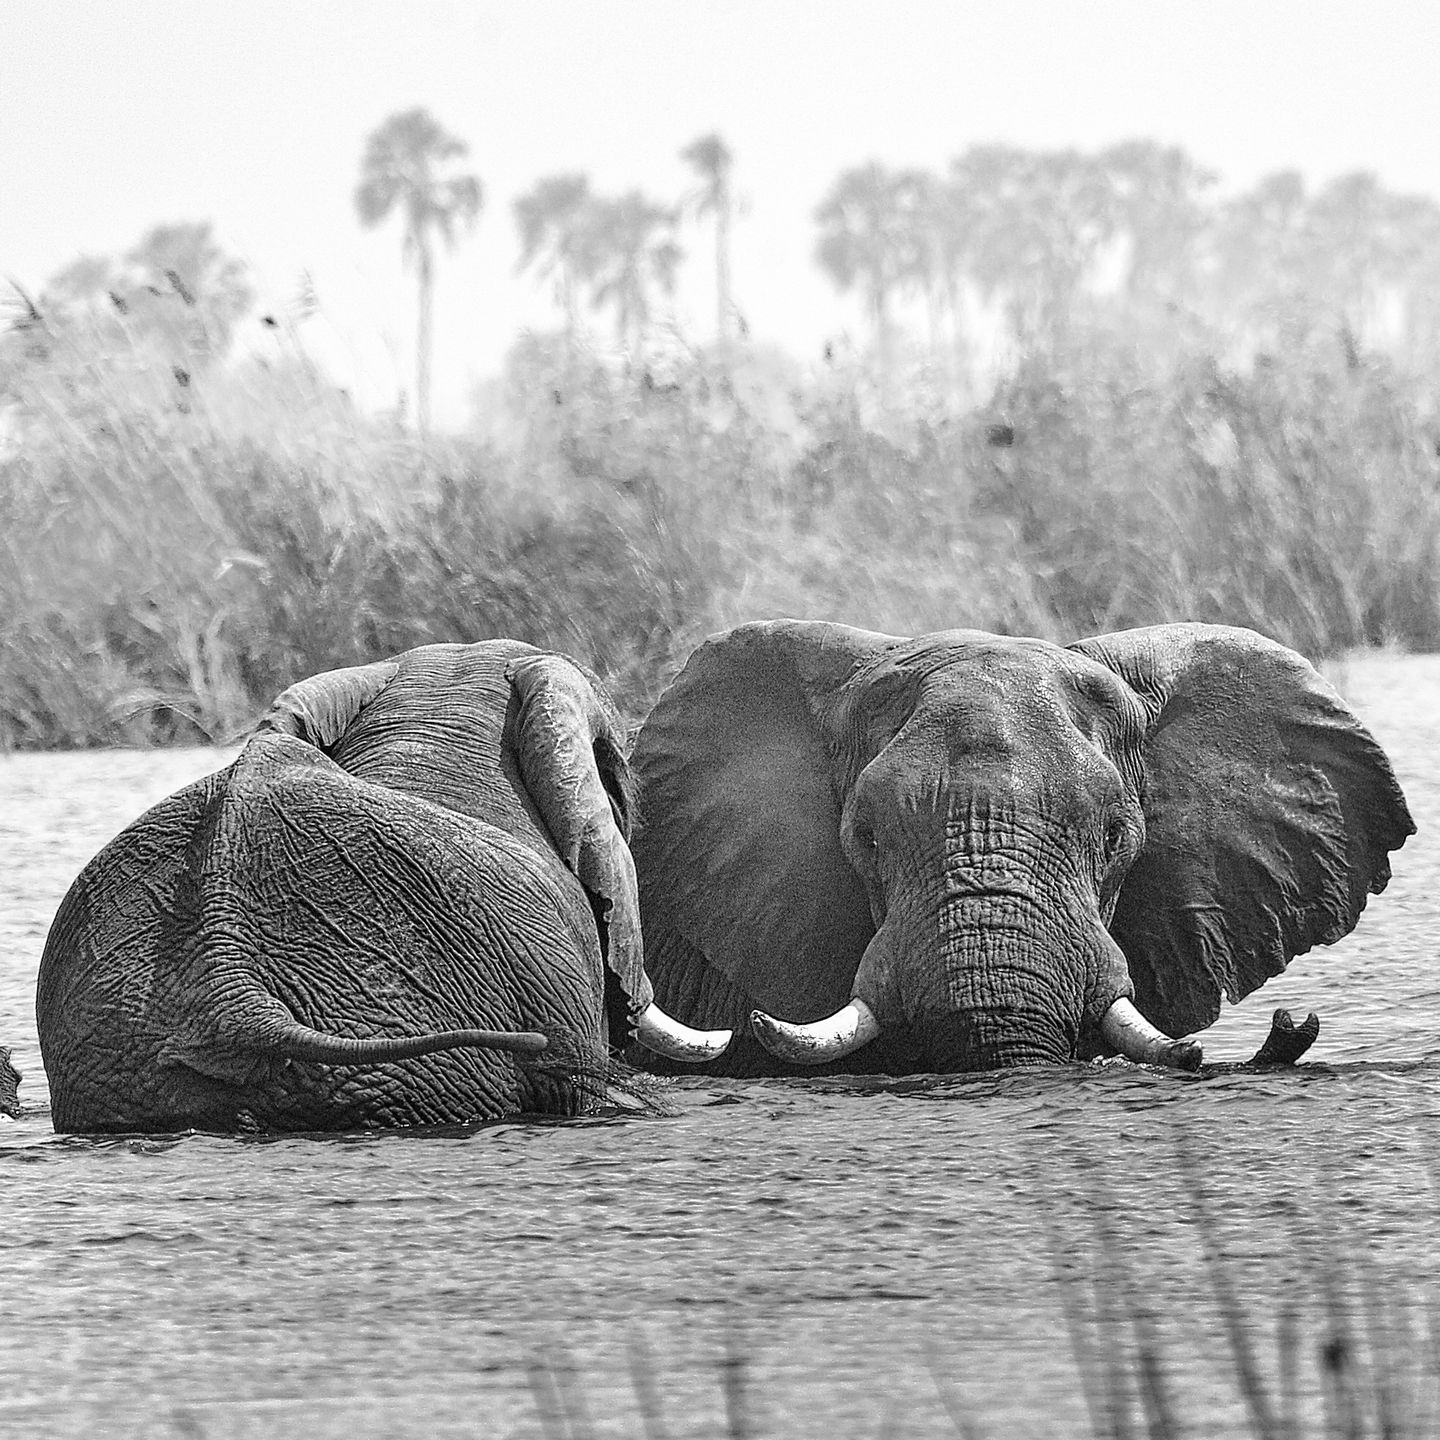 Elephants in the lagoon 5